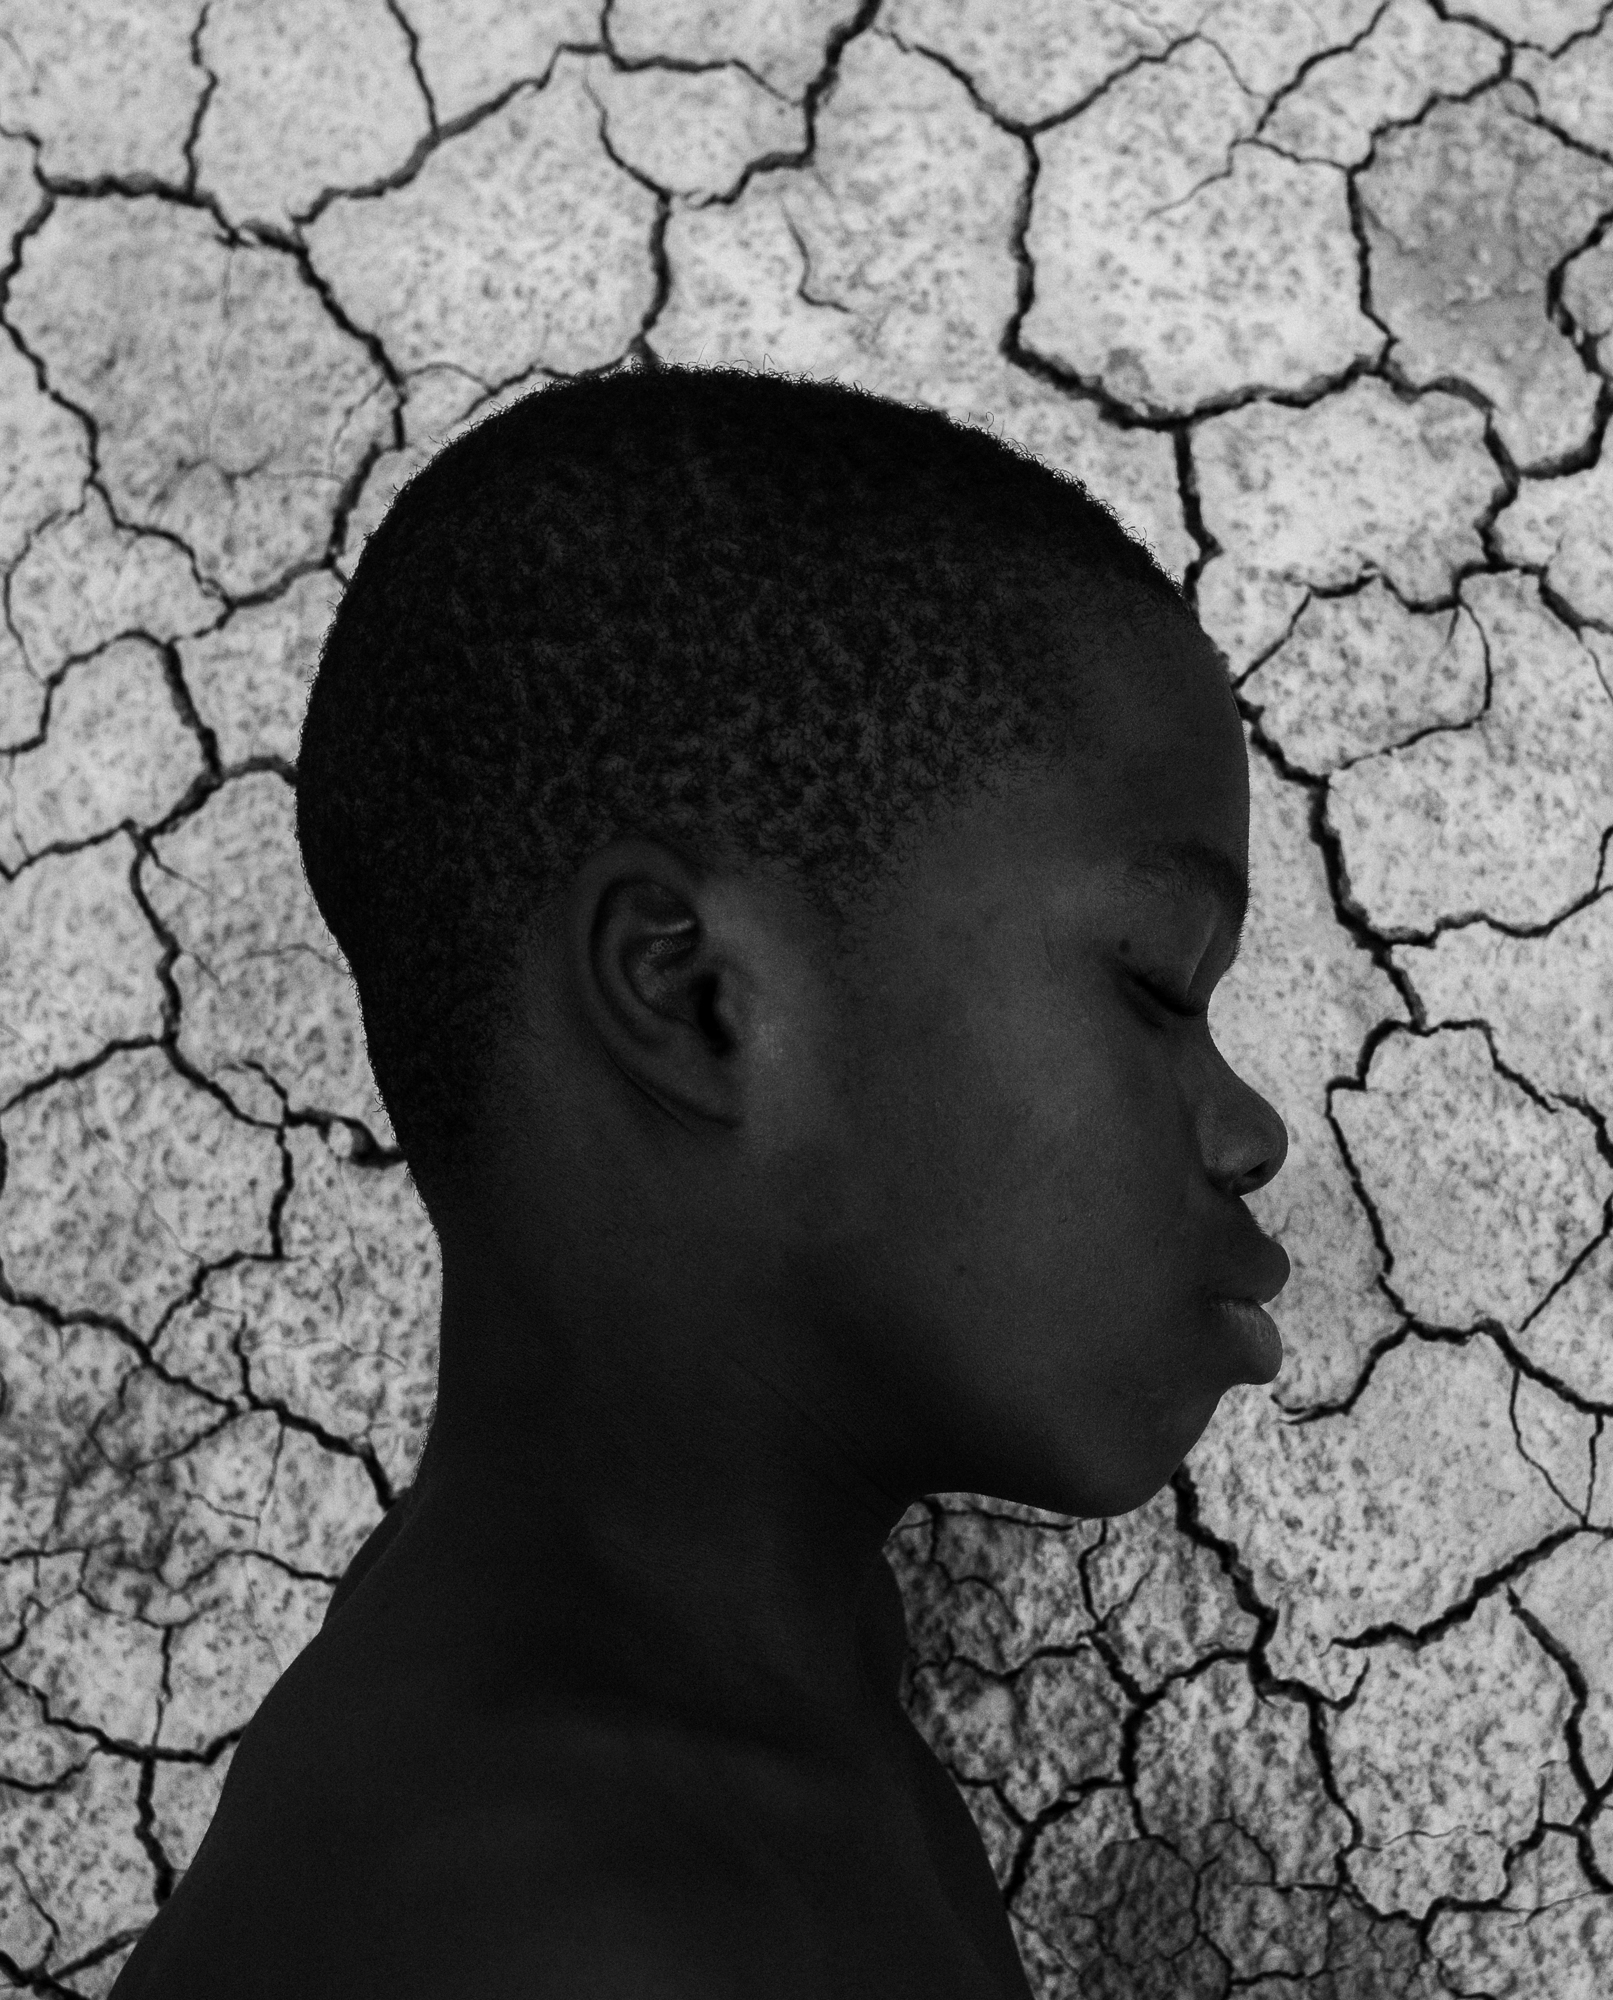  Boy and Crakedd Earth - Jamestown, Accra 